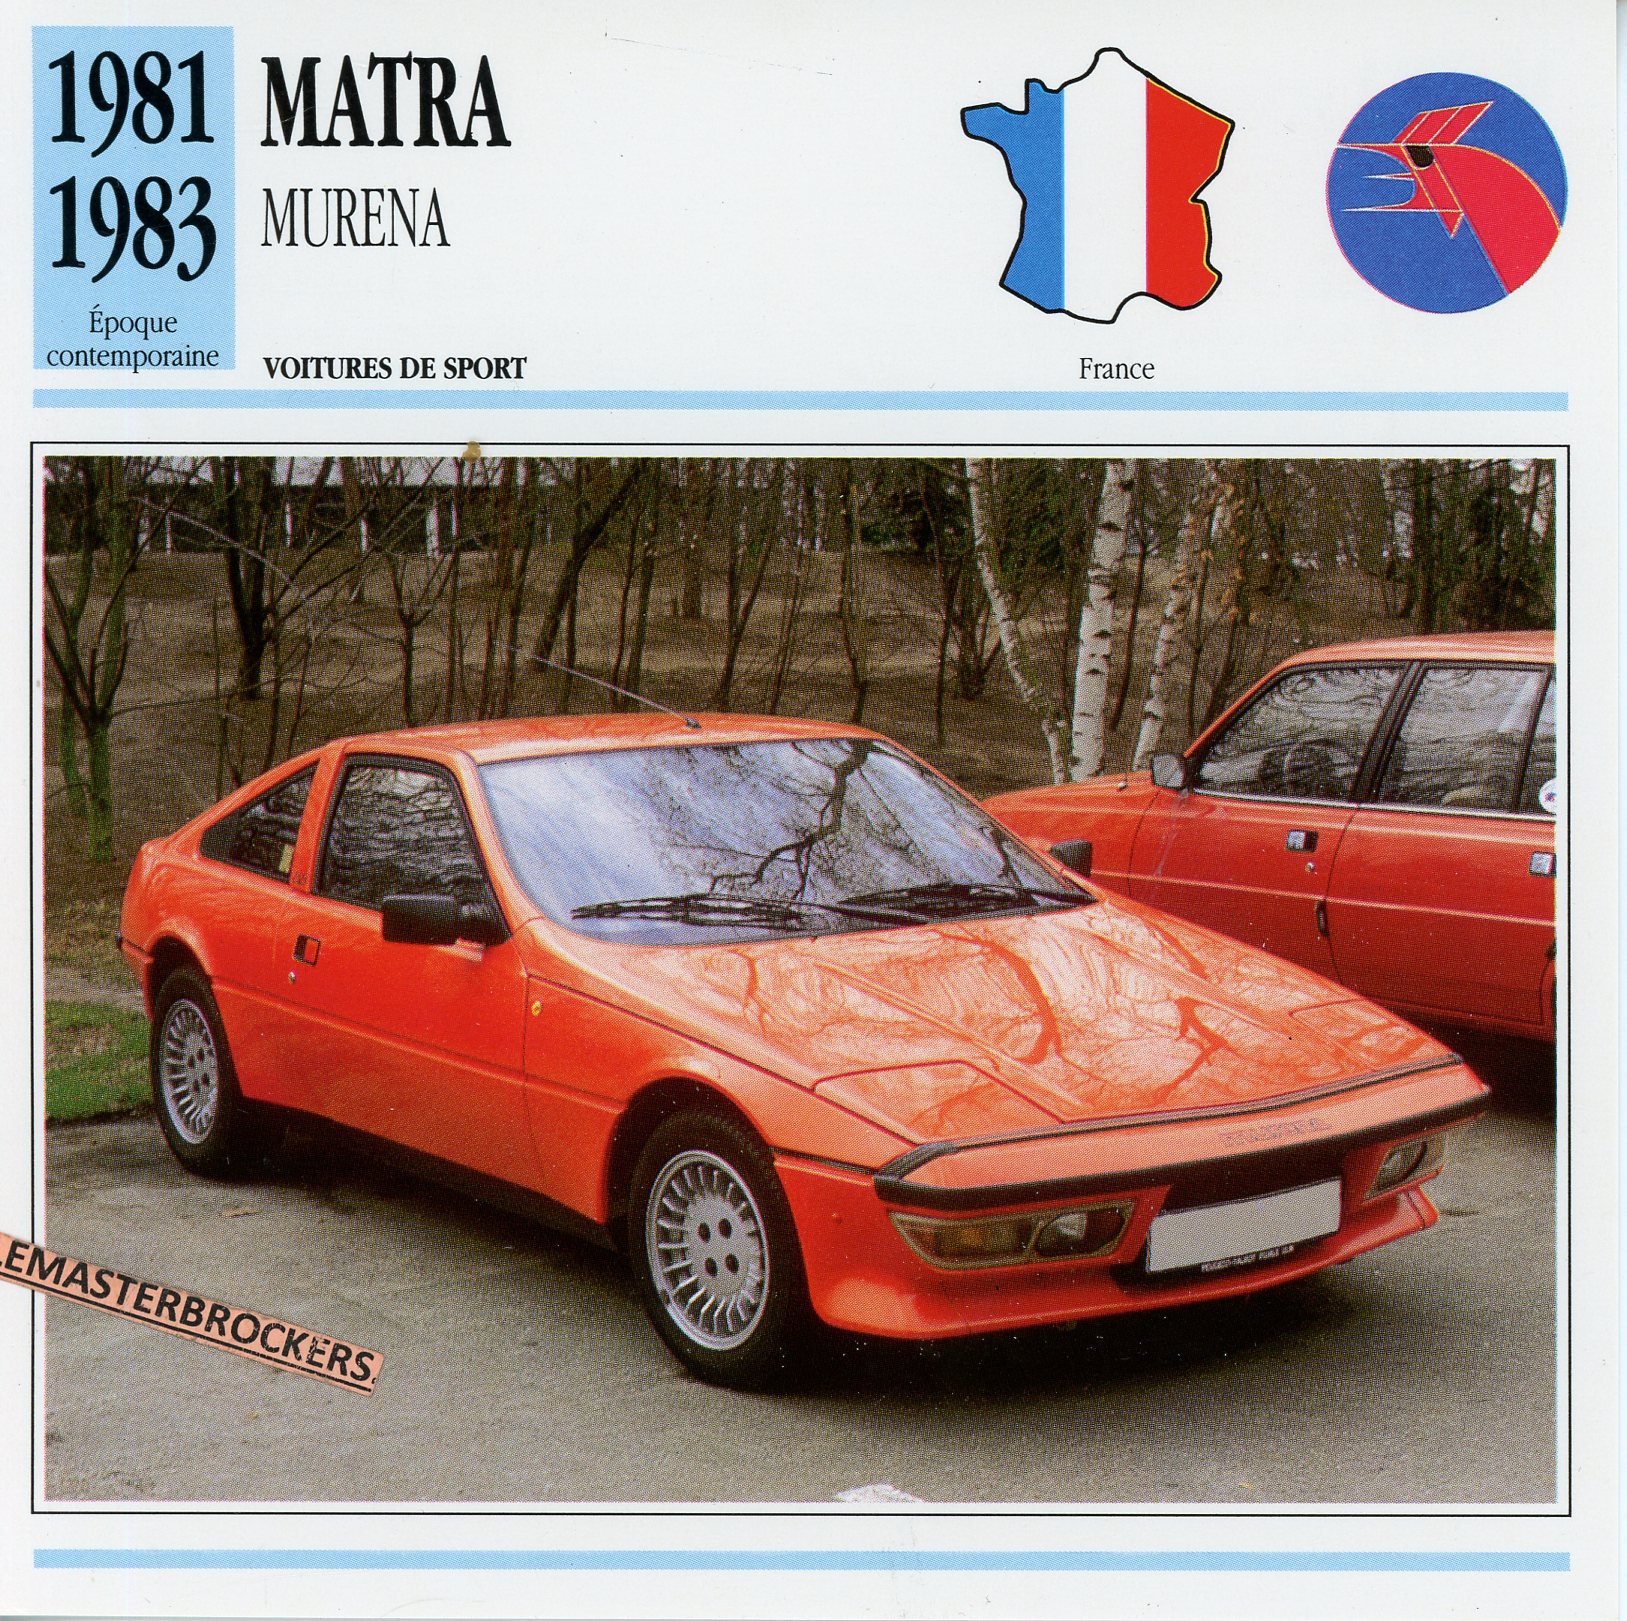 MATRA-MURENA-1981-1983-FICHE-AUTO-ATLAS-LEMASTERBROCKERS